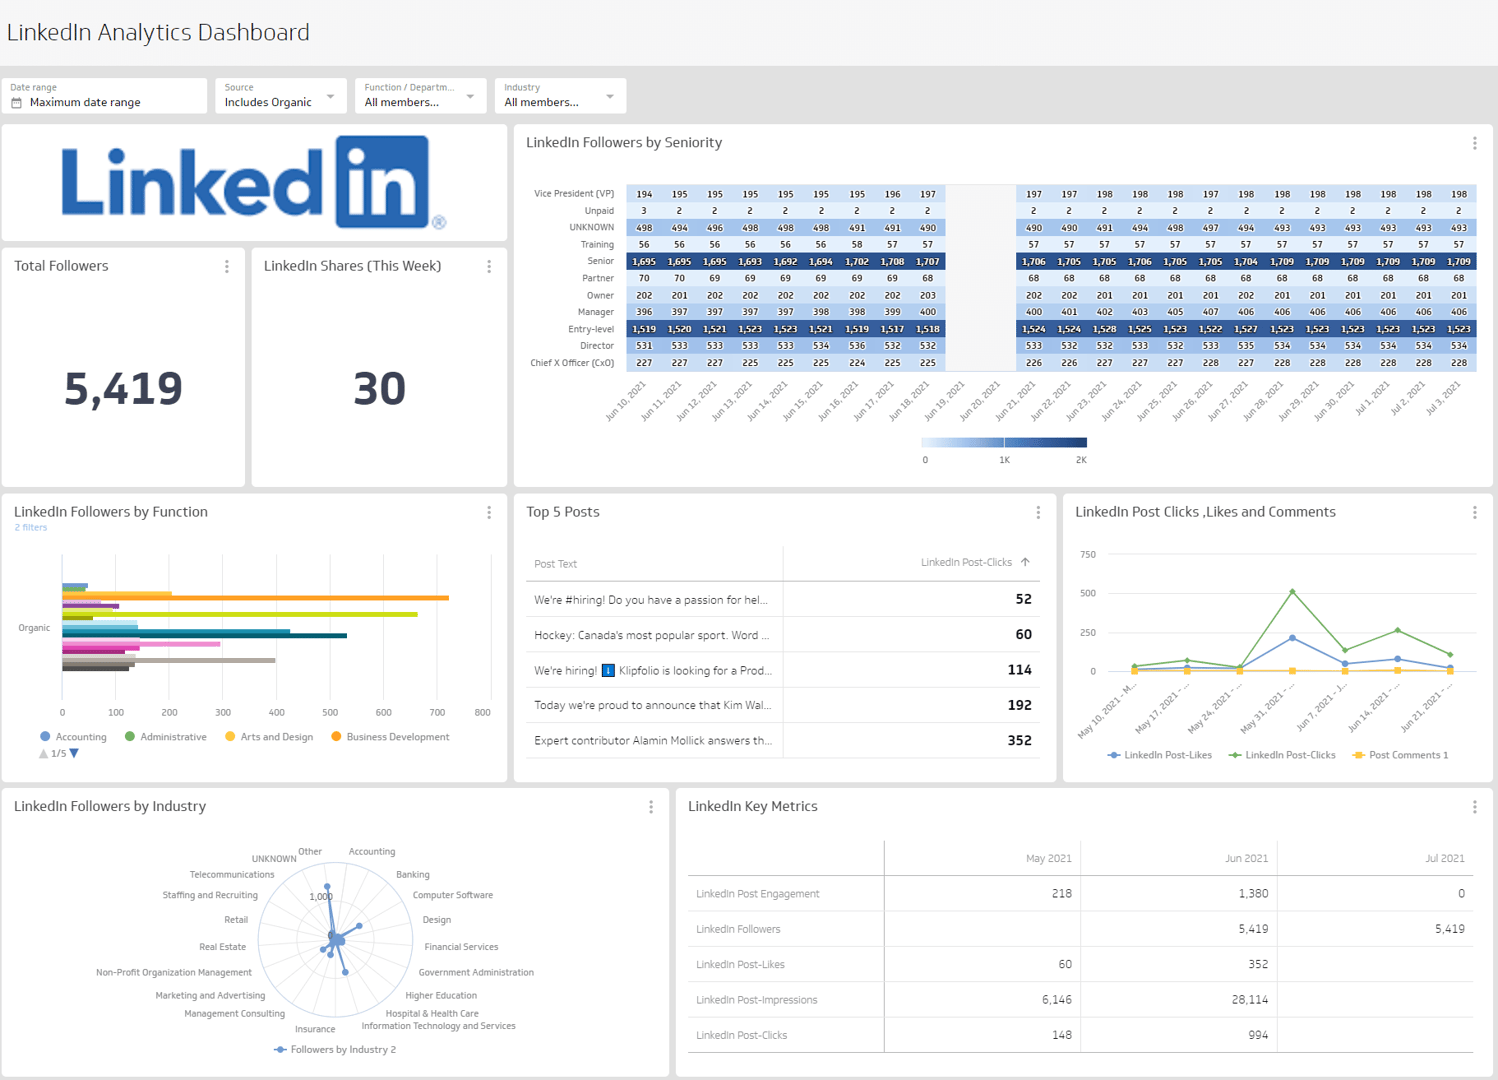 Related Dashboard Examples - LinkedIn Analytics Dashboard